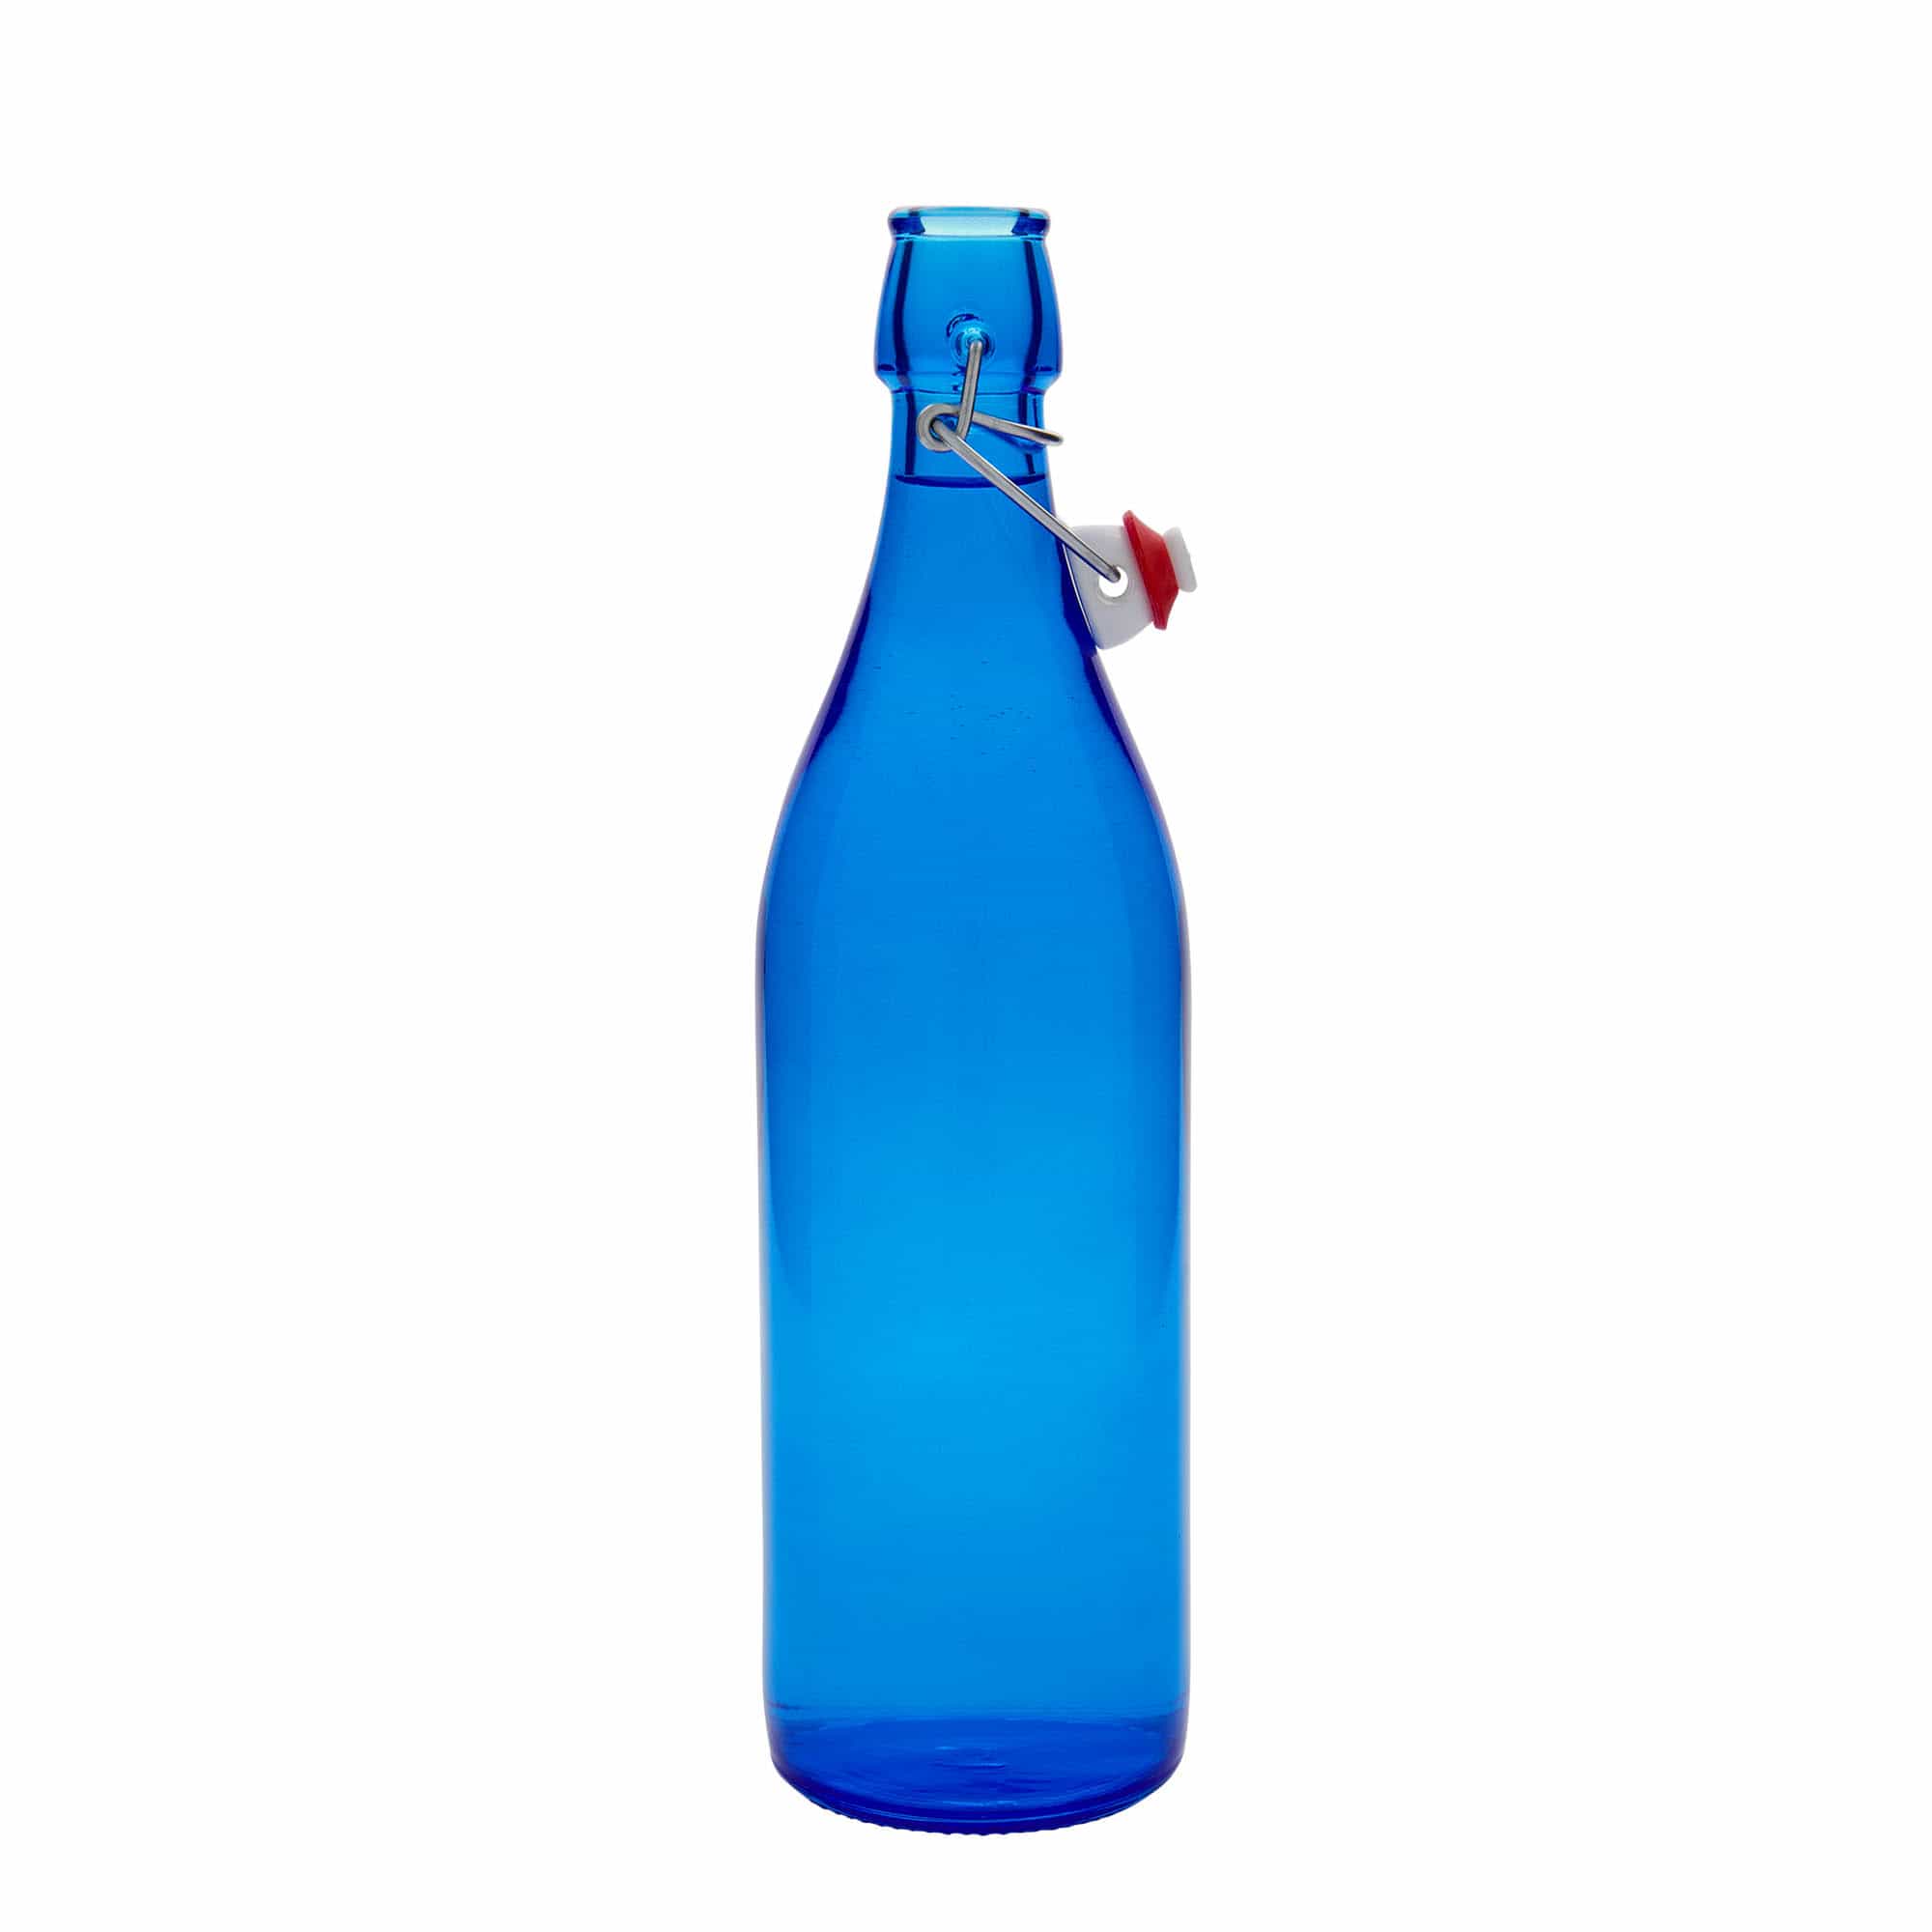 1,000 ml glass bottle 'Giara', blue, closure: swing top